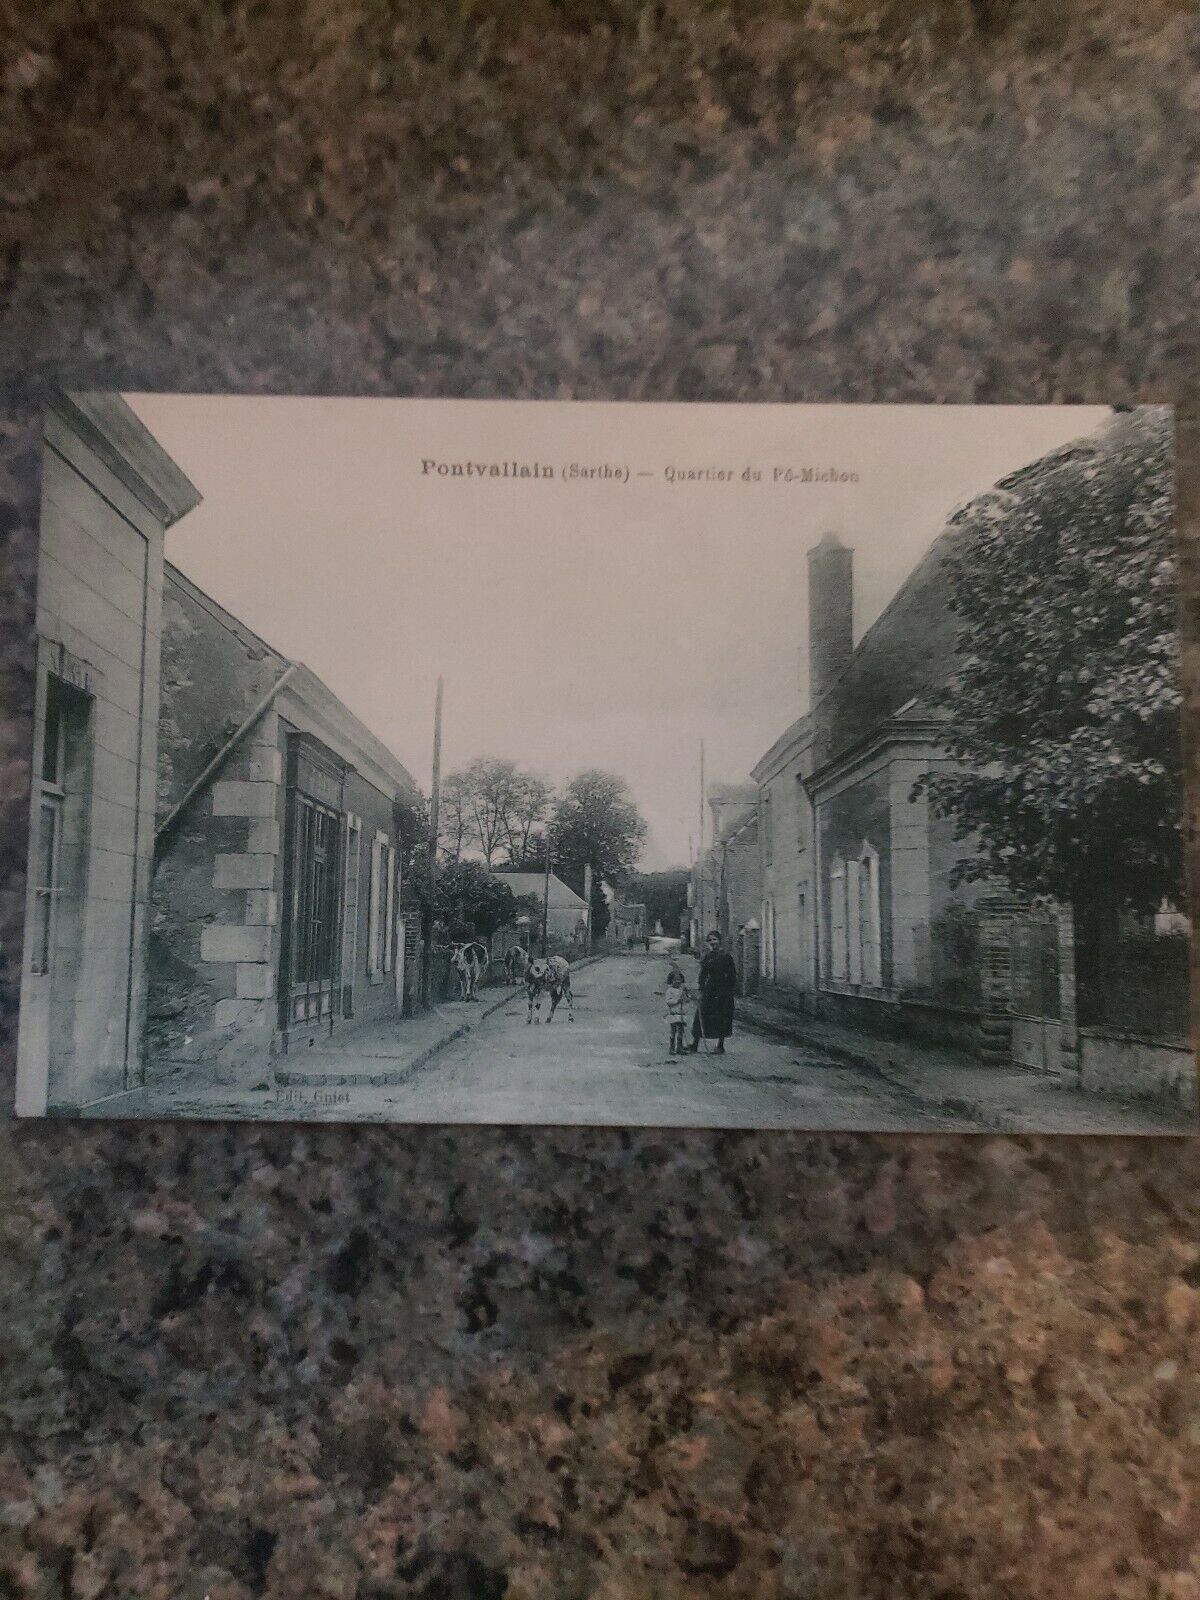 c1900 Postcard: French, Pontvallain (sarthe) Quartier du Po-Michon RPPC